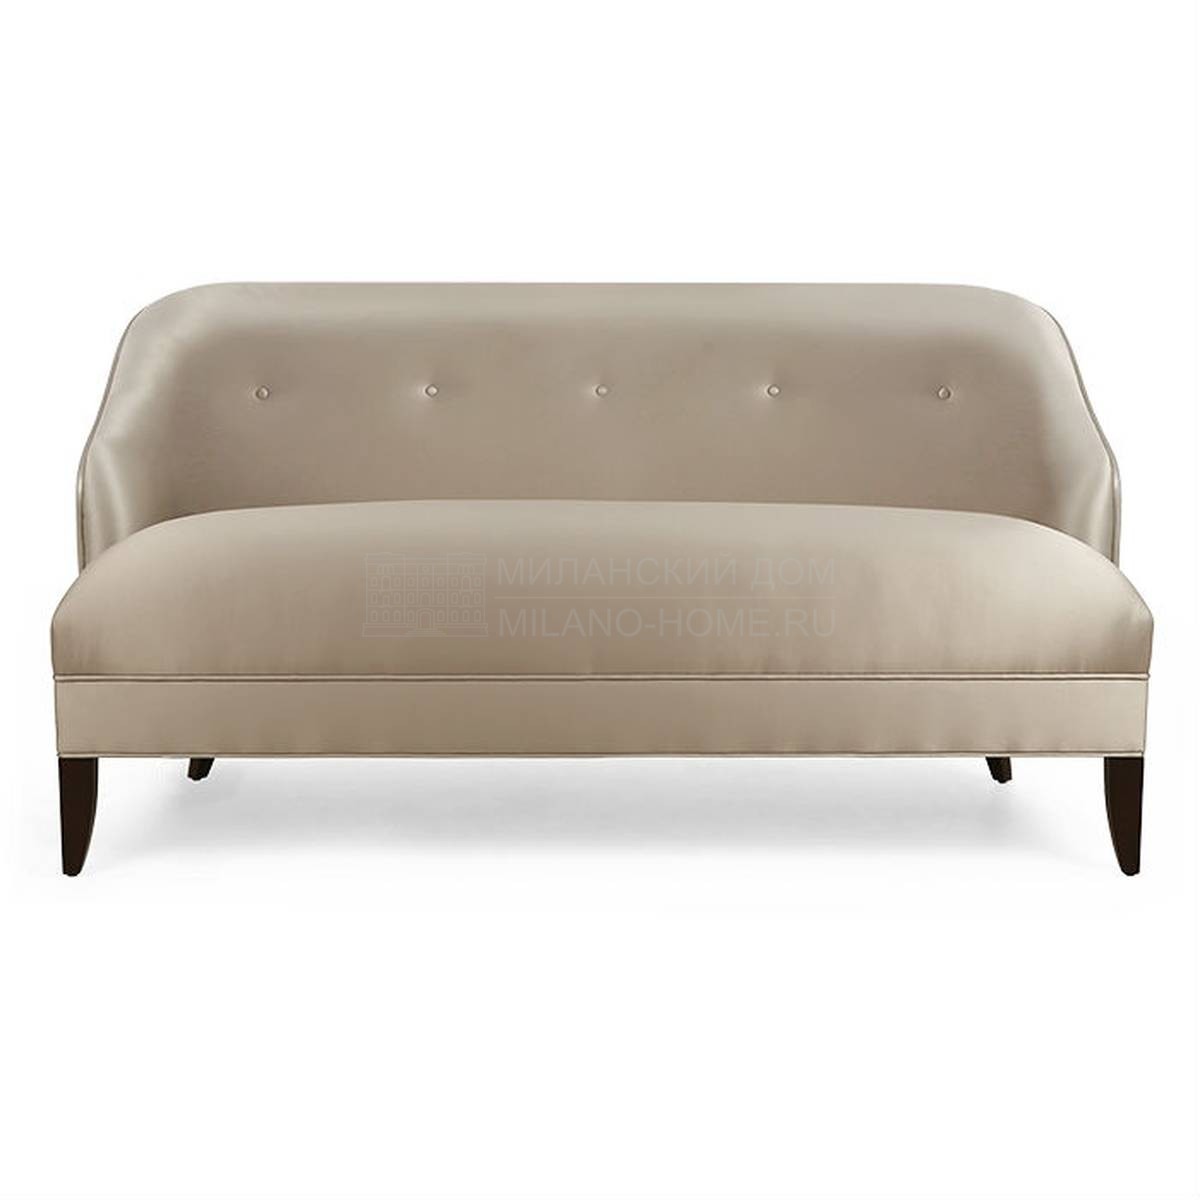 Прямой диван Almee sofa из США фабрики CHRISTOPHER GUY